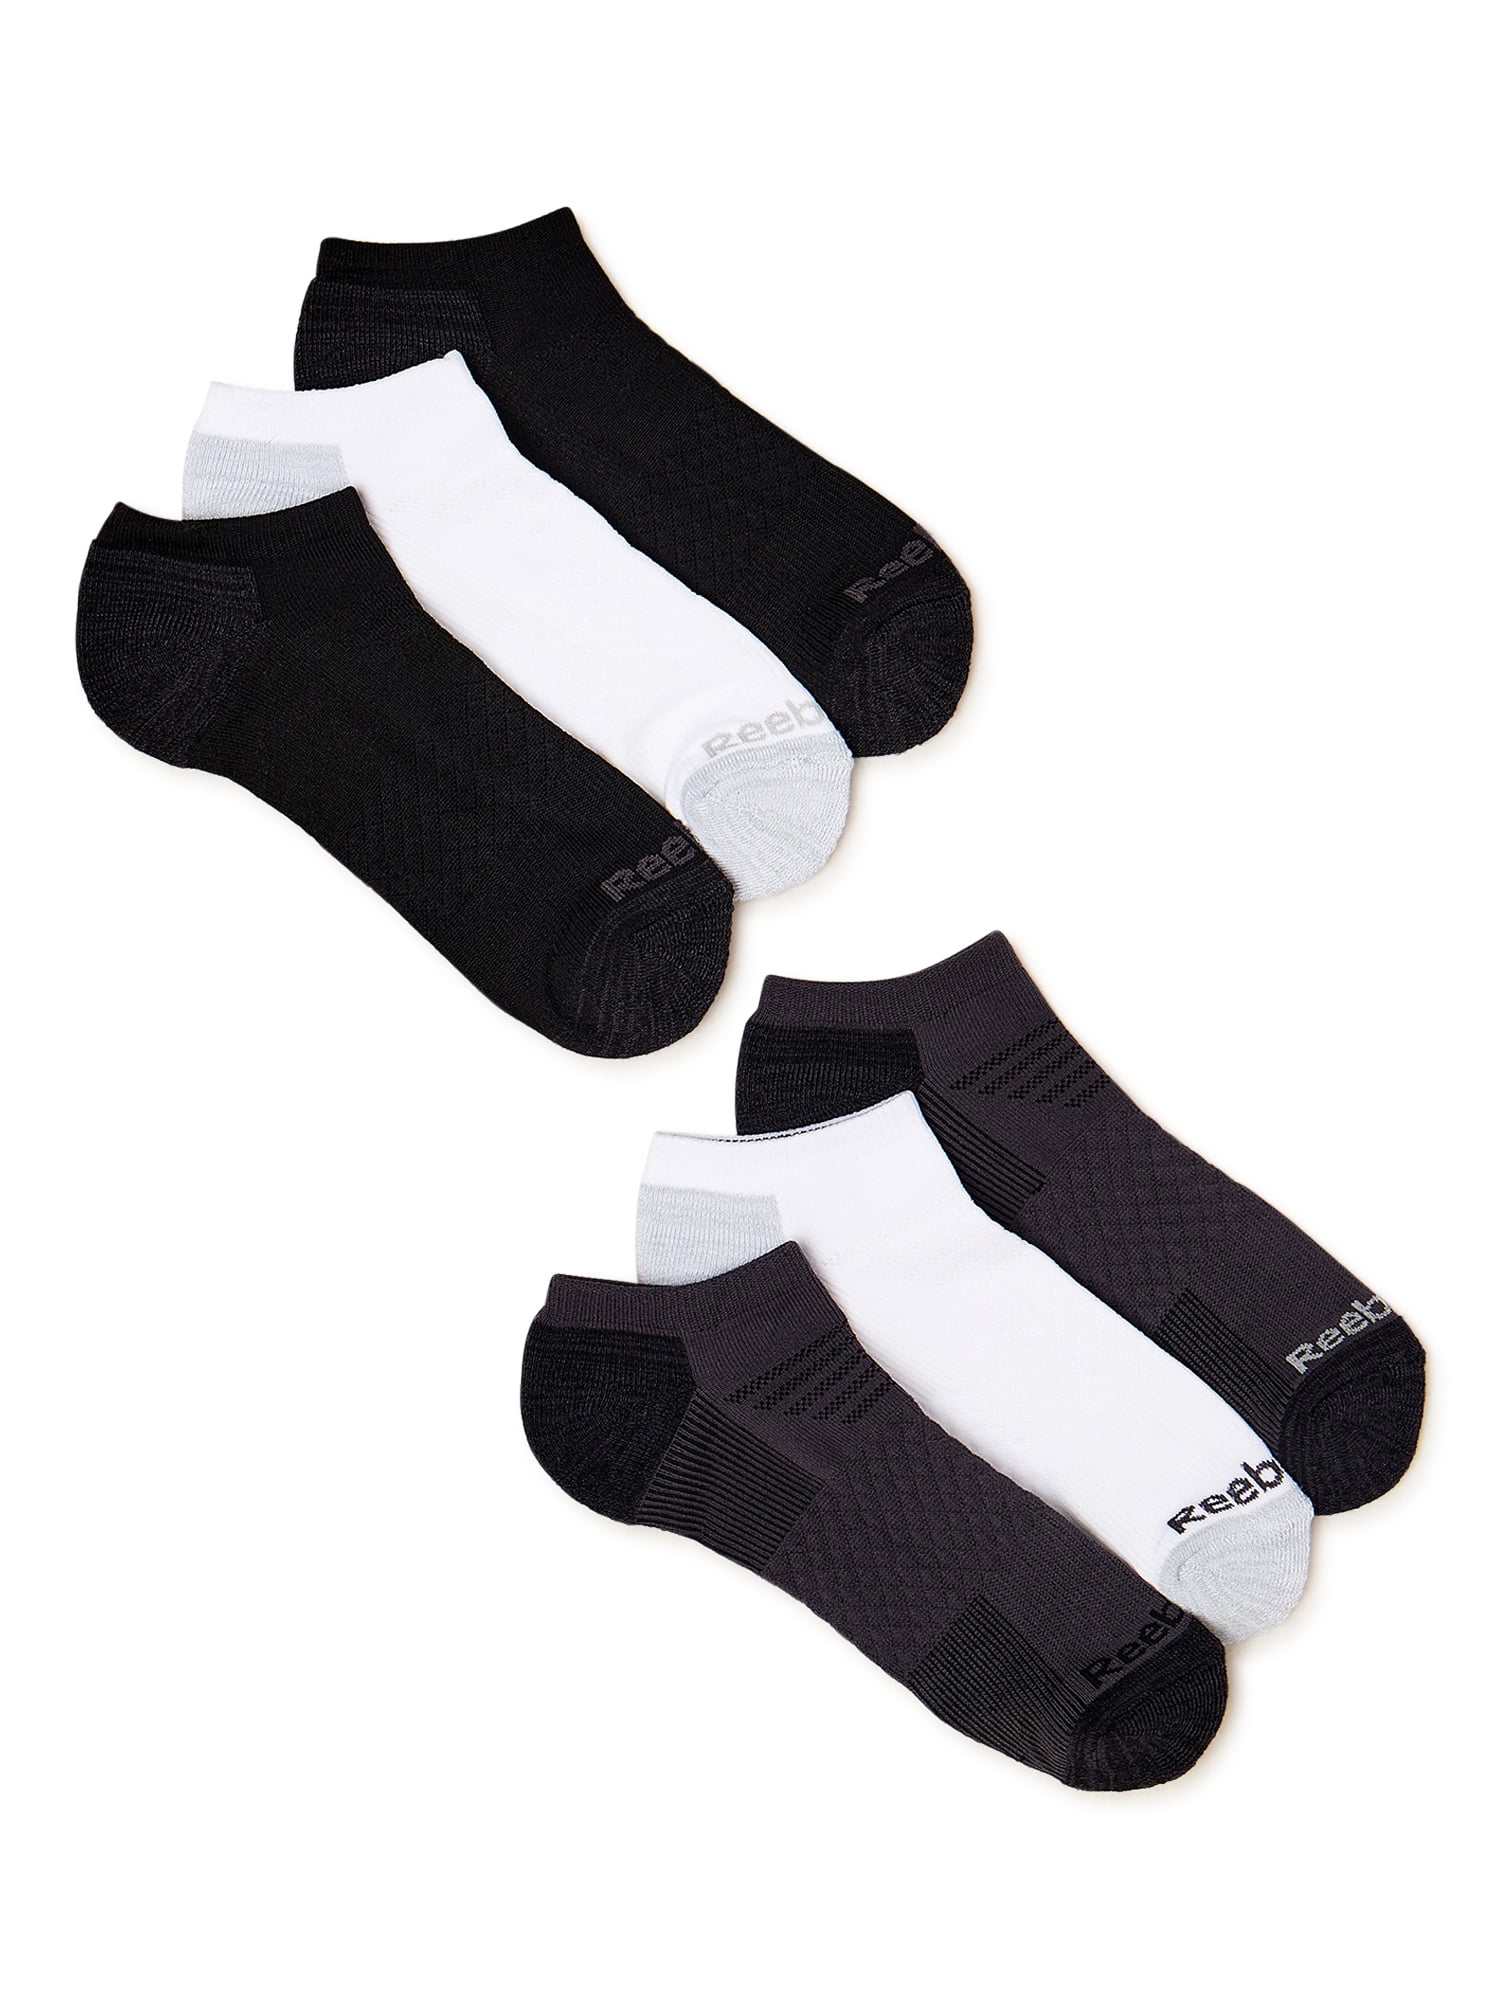 Reebok Men's Tech Comfort Low Cut Socks, 6-Pack